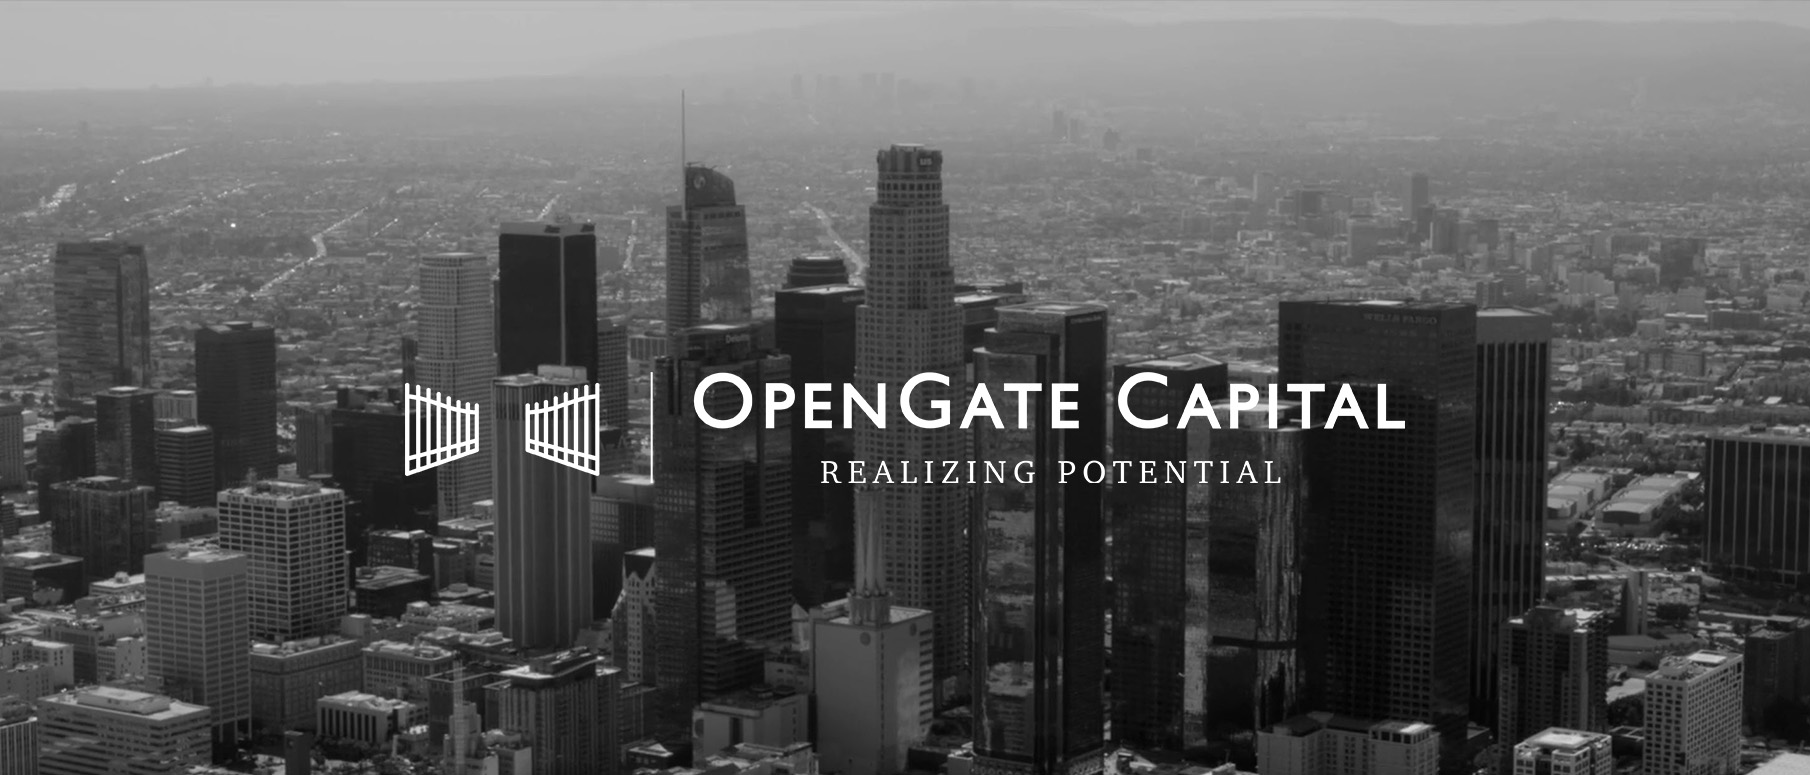 Backbone Capital arranges $50M+ debt financing for OpenGate Capital acquisitions of Chemsolve & Chemisphere